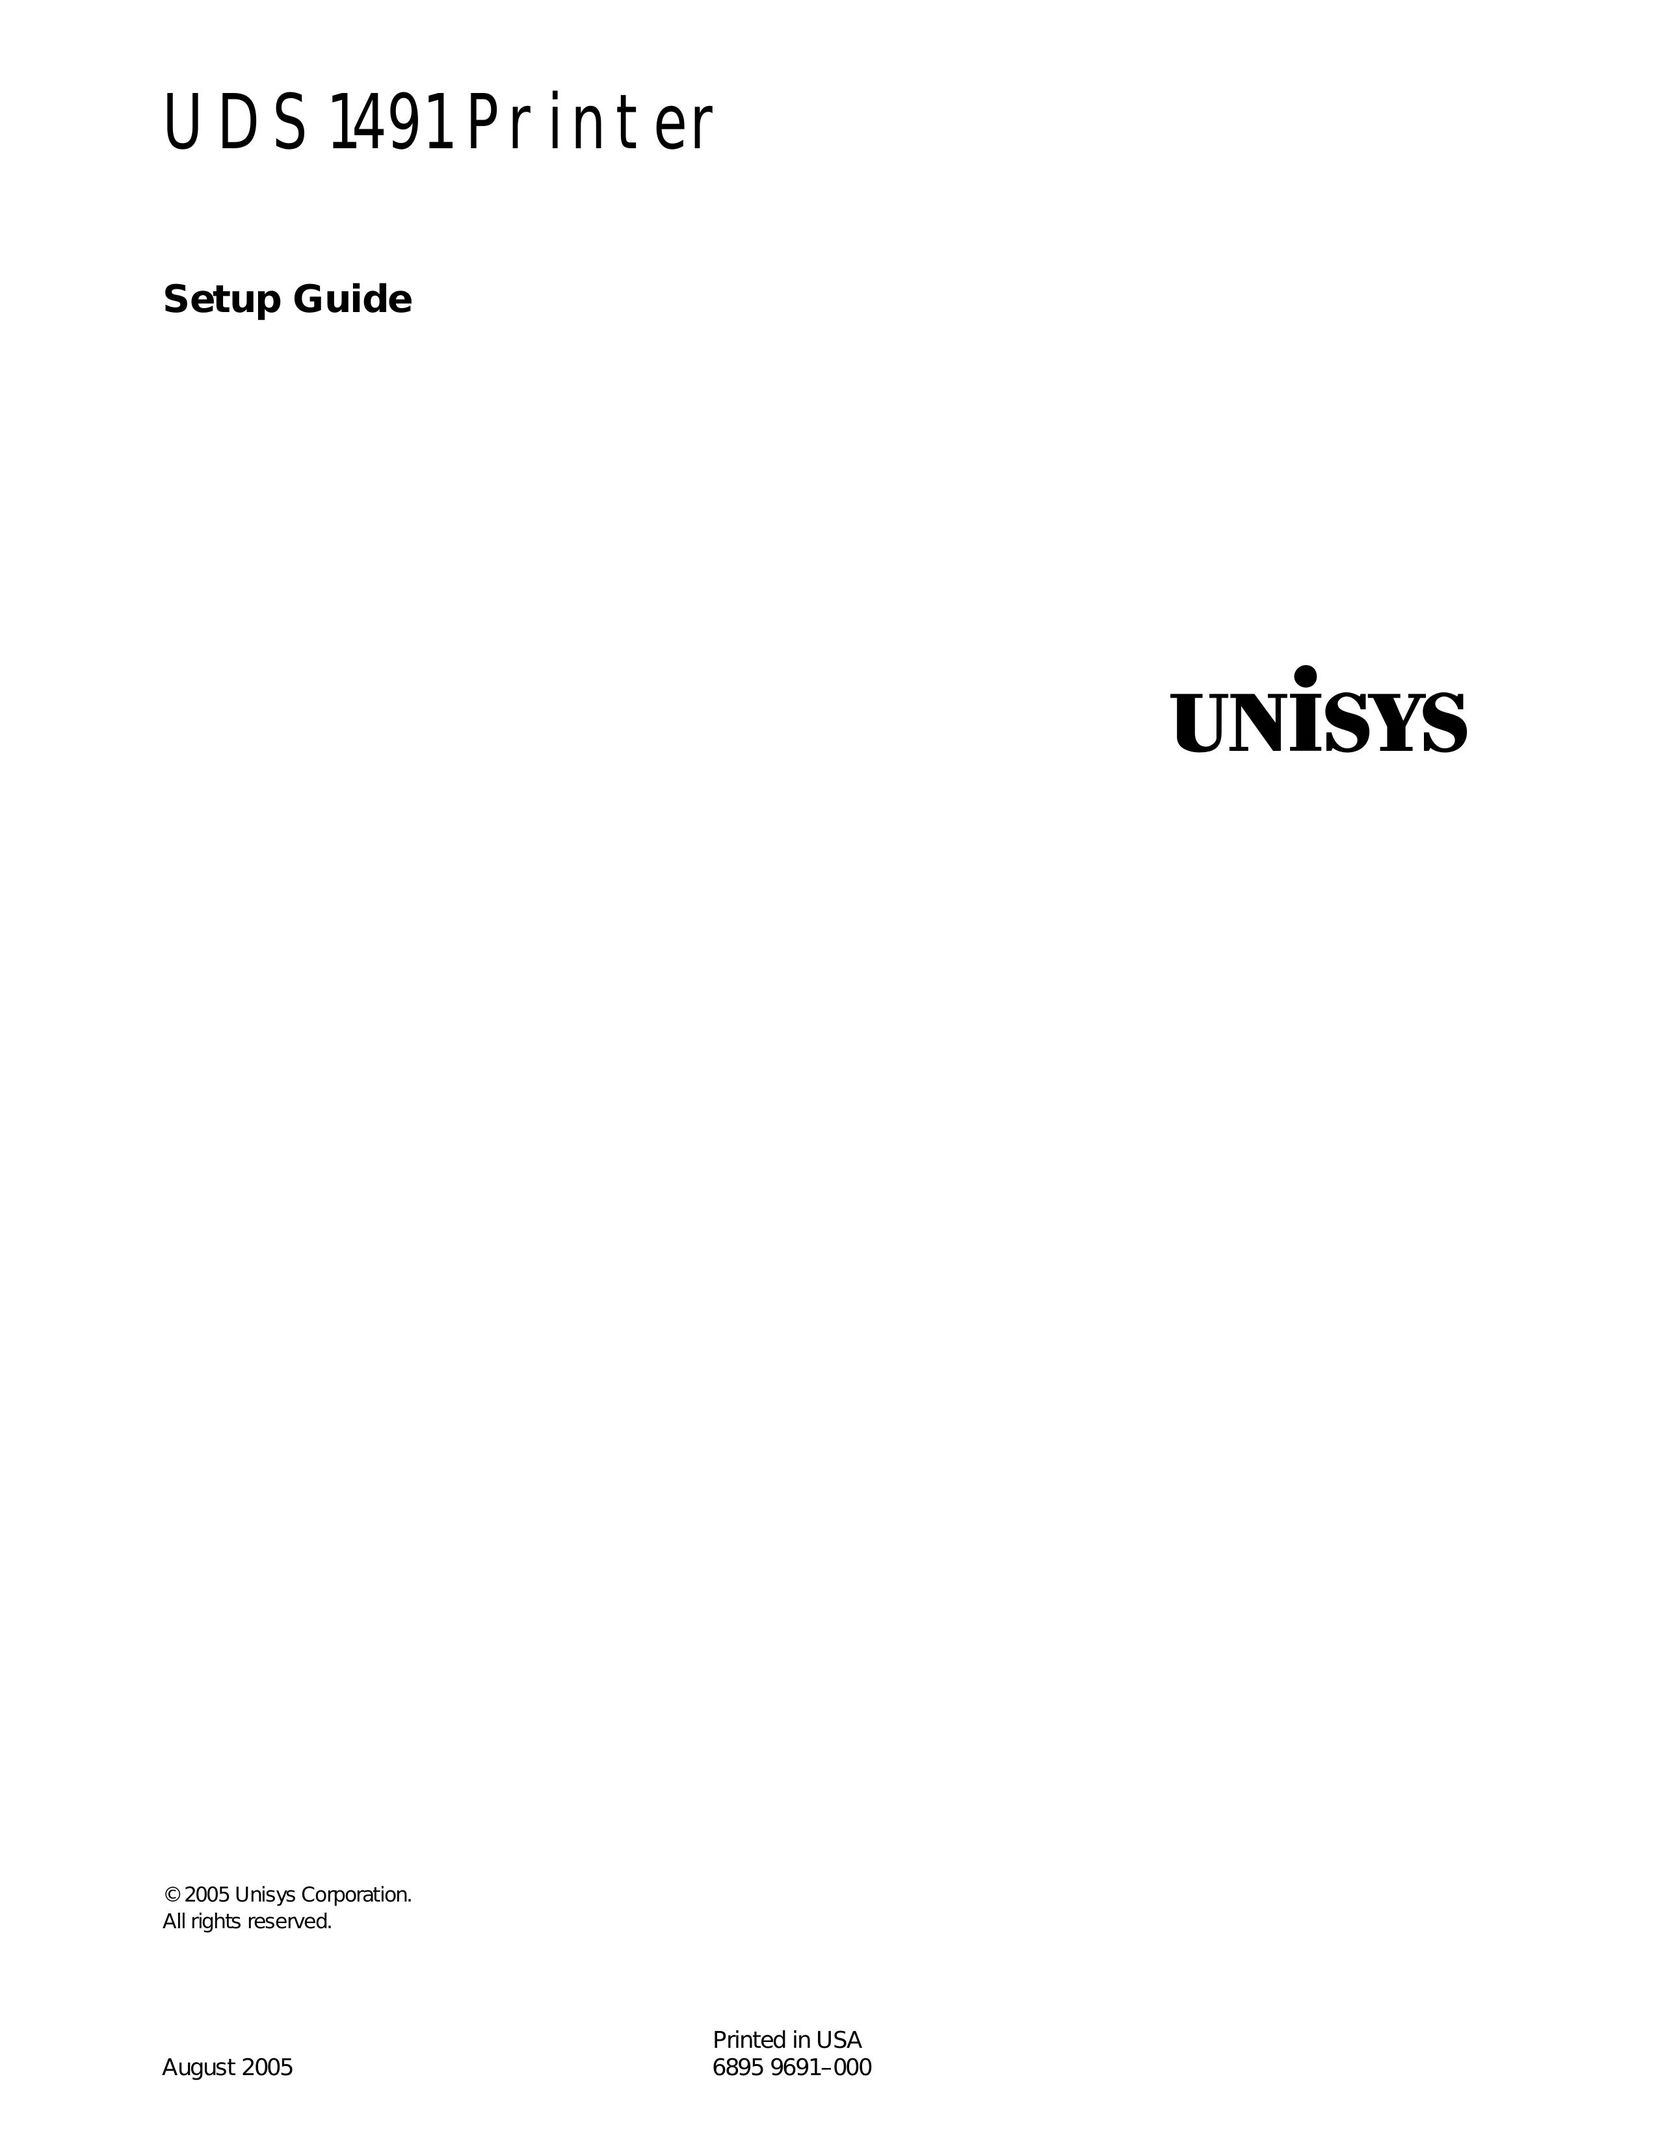 Unisys UDS 1491 Printer User Manual